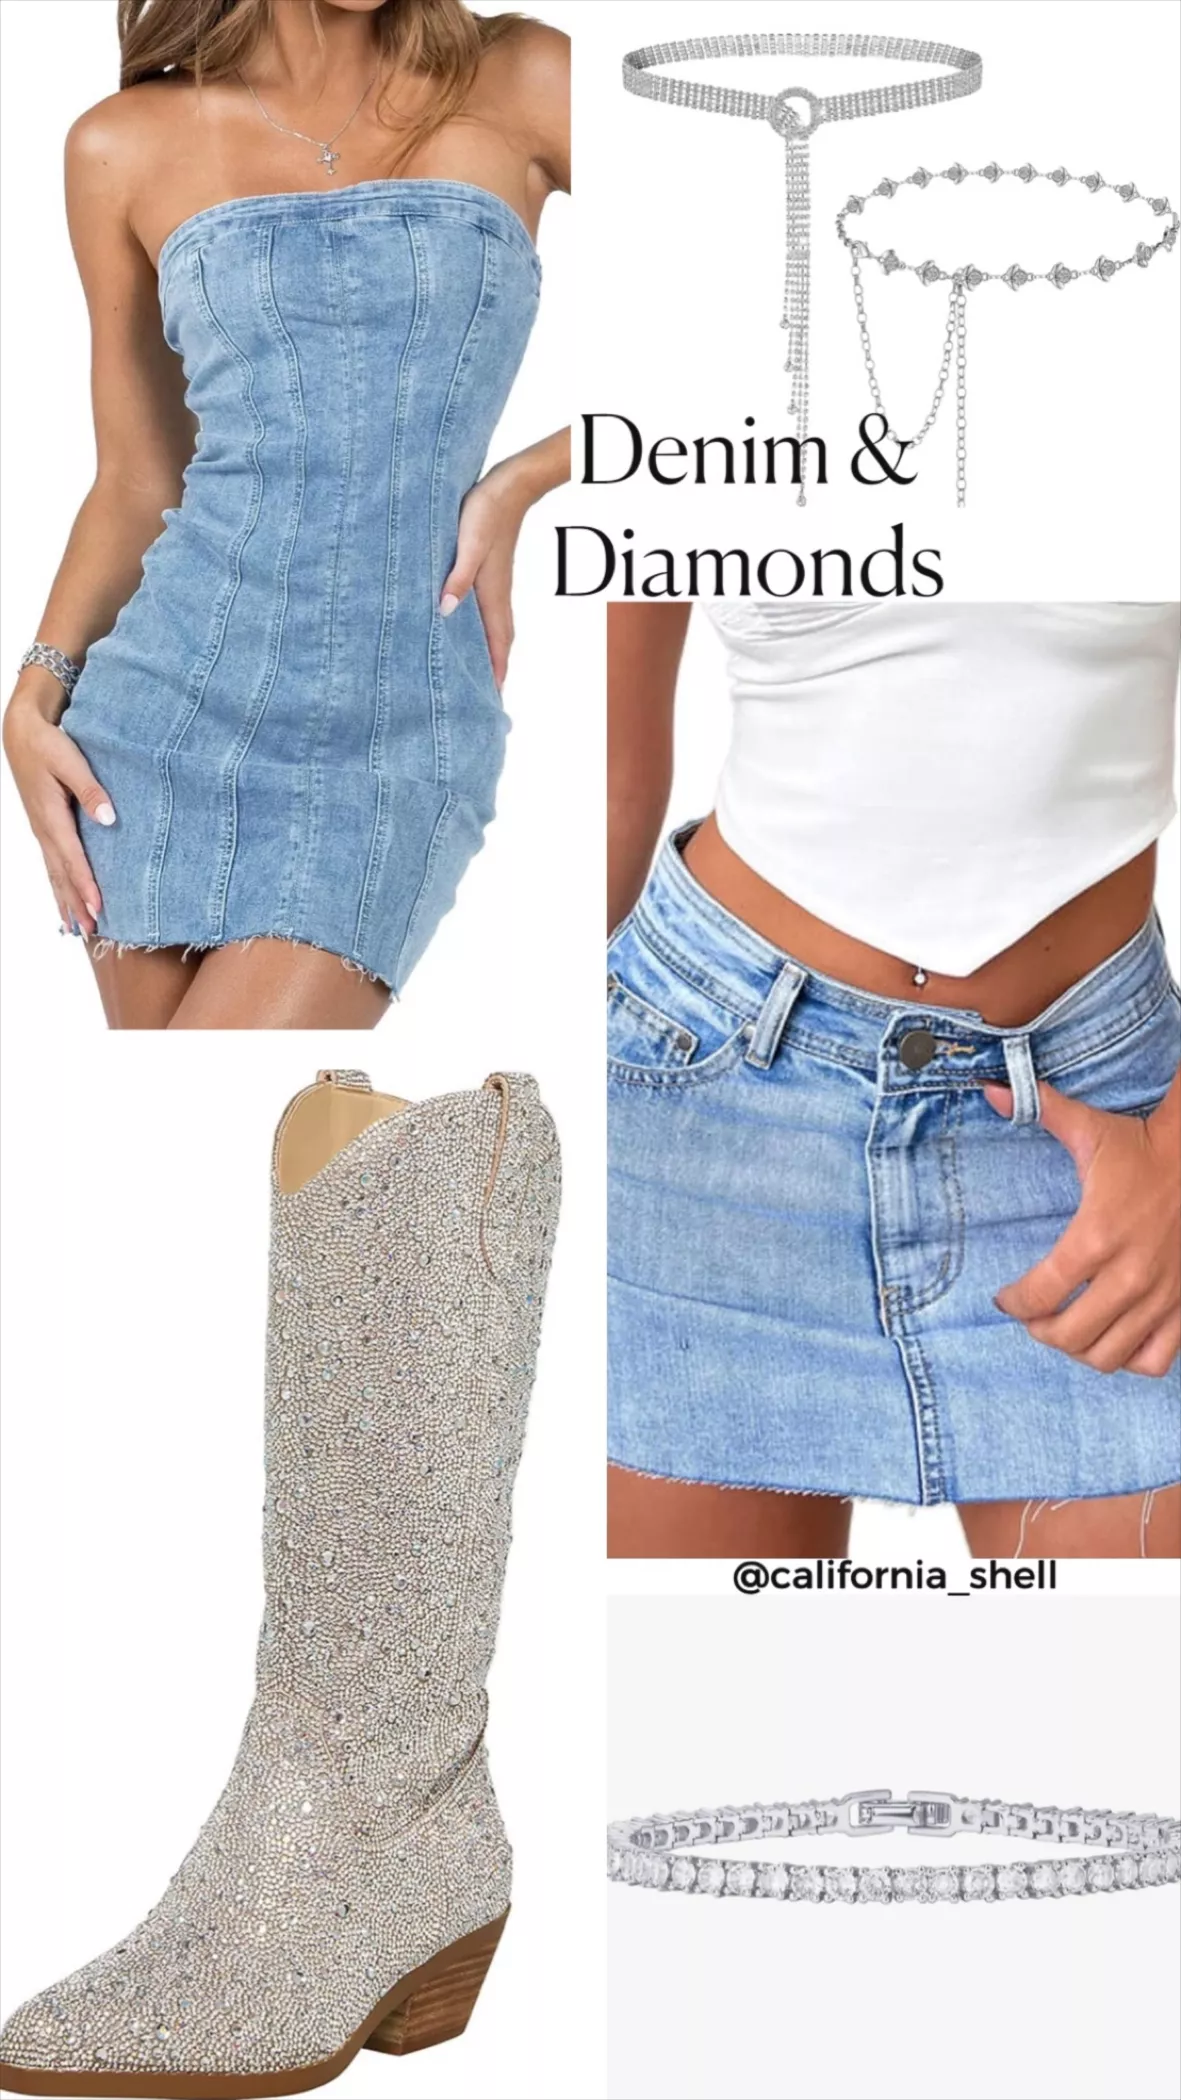 Denim & Diamonds Attire - What to Wear